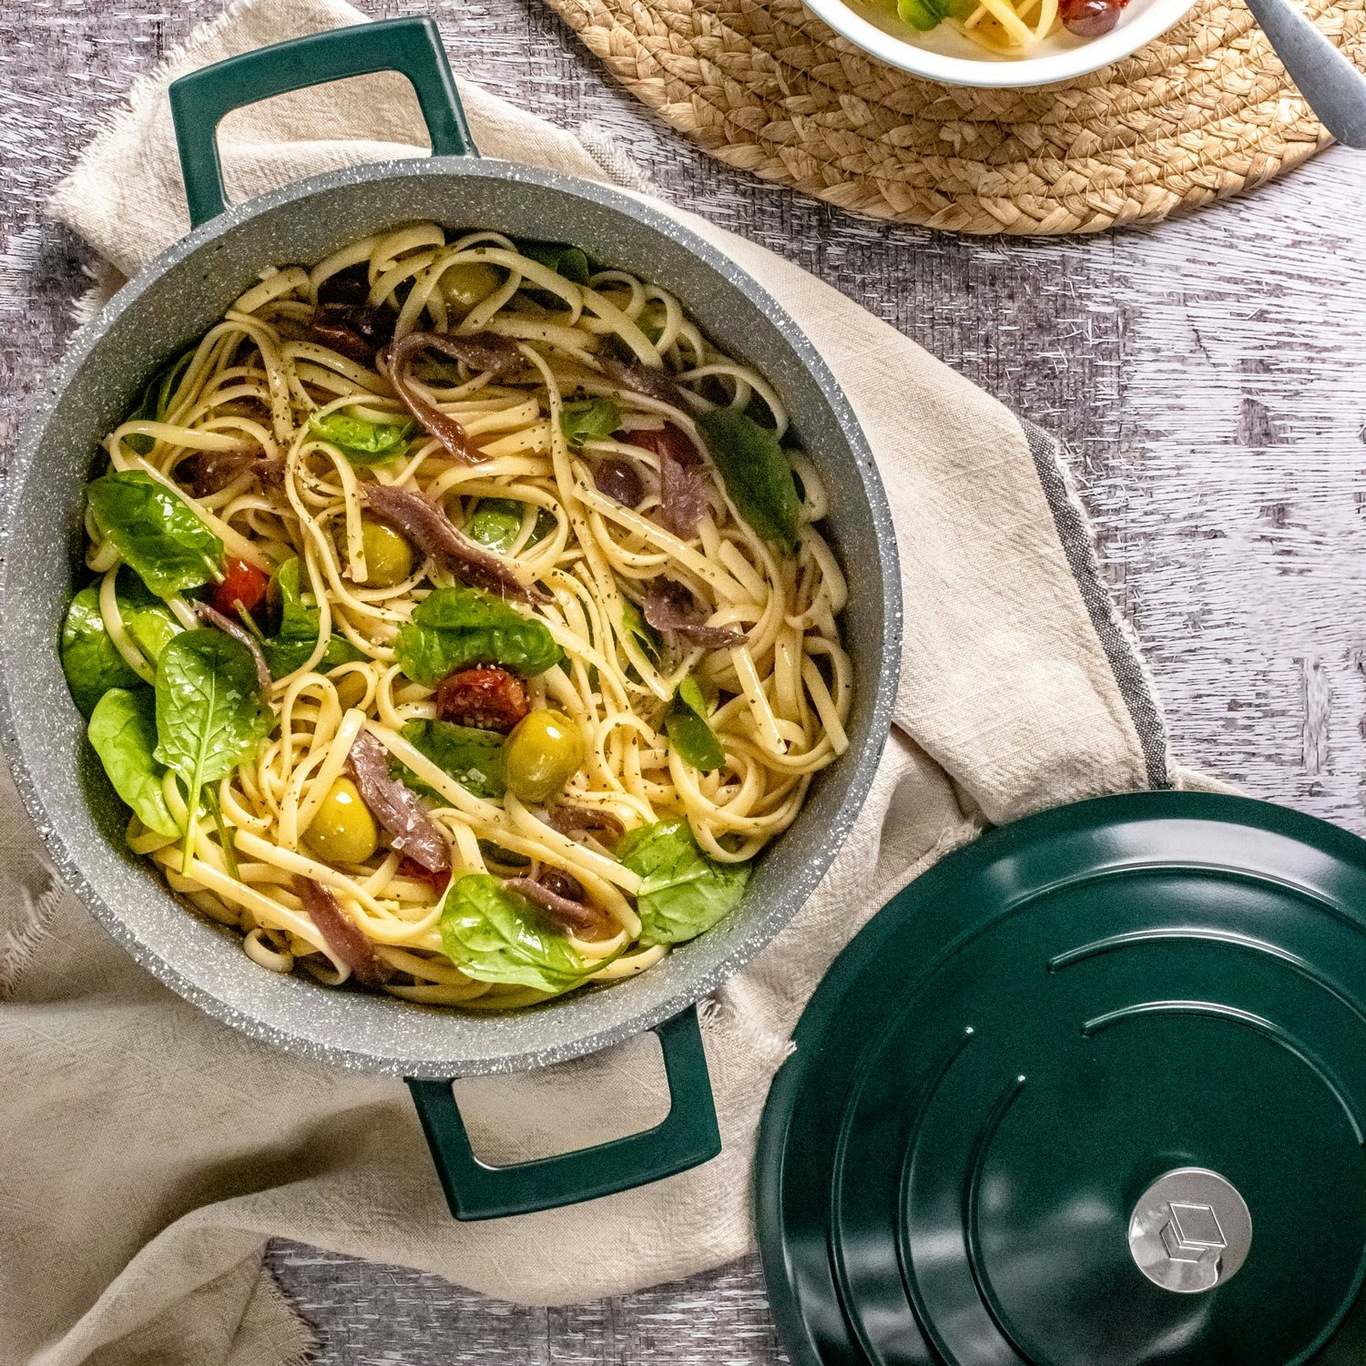 https://royaldesign.com/image/2/kitchen-craft-masterclass-casserole-hunter-green-5?w=800&quality=80